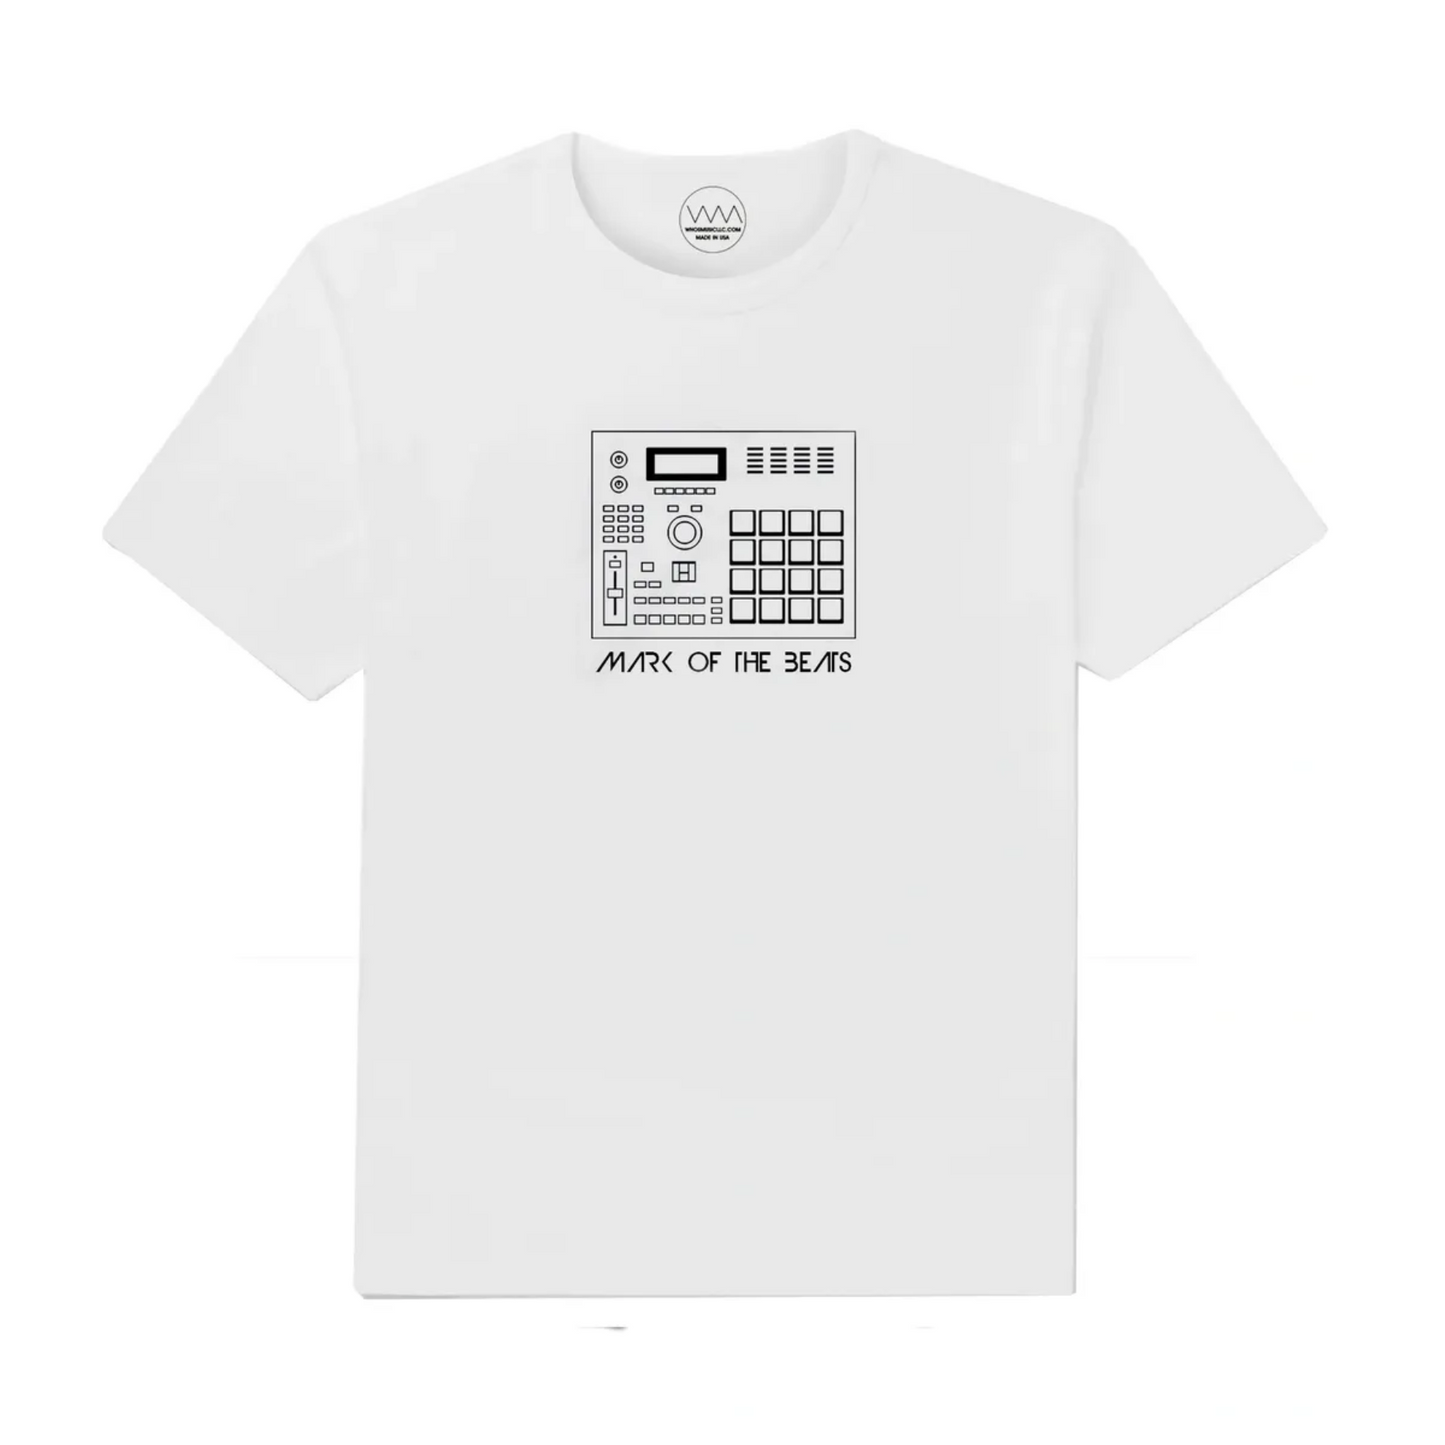 Mark of the Beats MPC 2000 (T-Shirt)